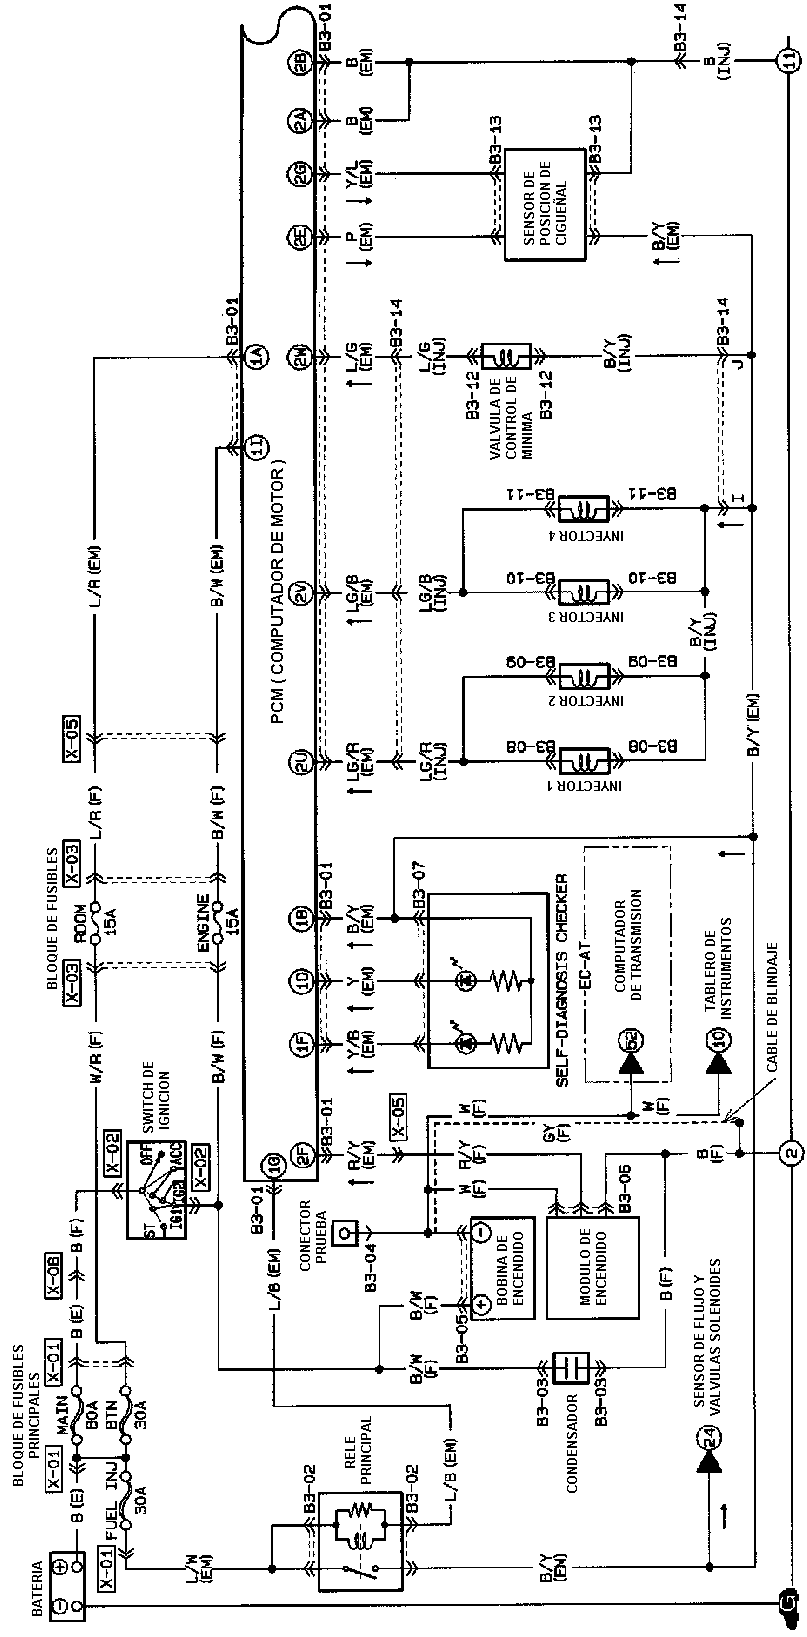 Wiring Diagram PDF: 01 Leganza Alternator Wiring Diagram